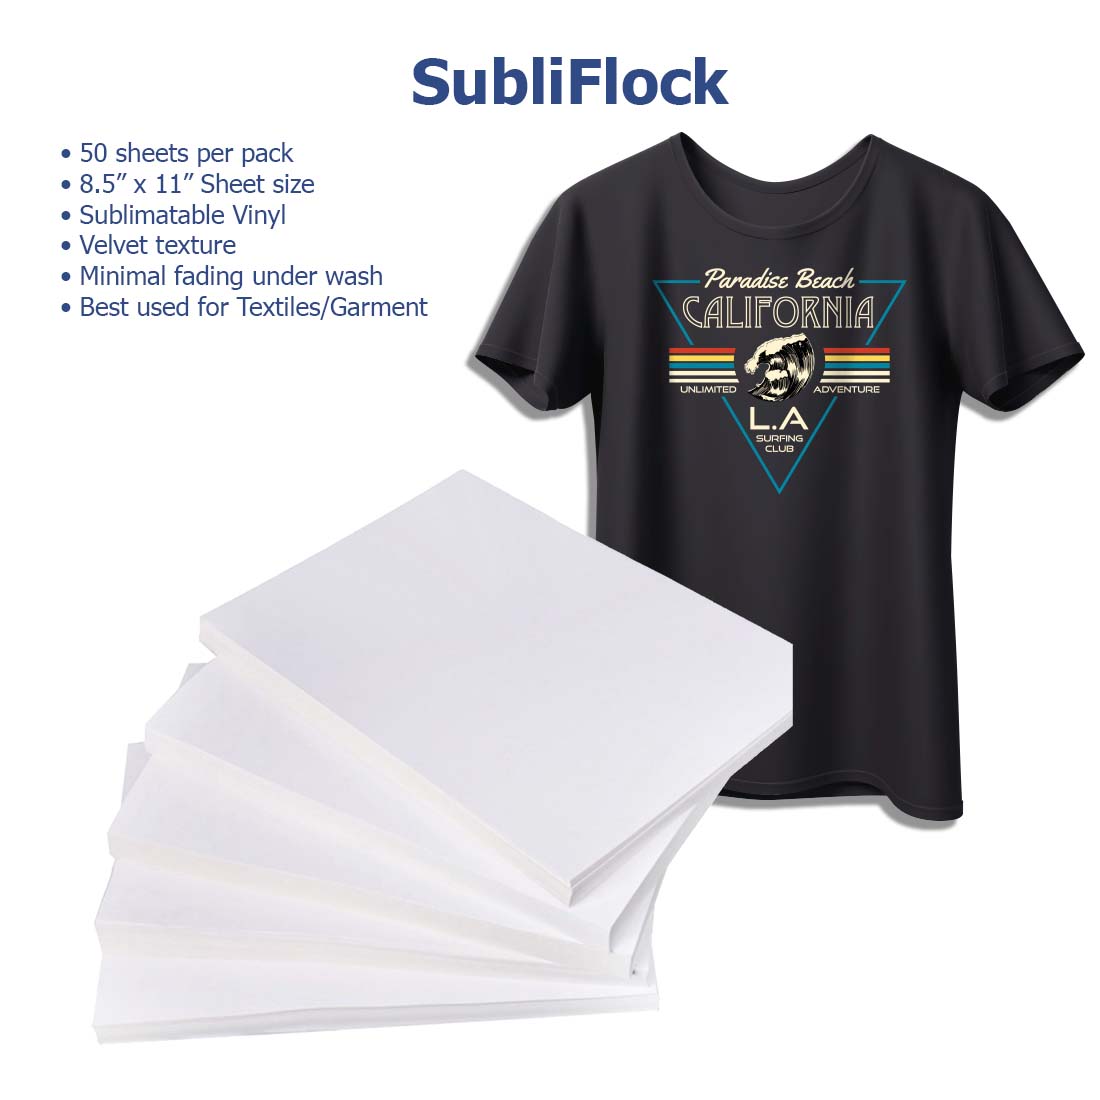 MultiPrint™ SubliFlock Printable Heat Transfer Vinyl - Joto Imaging Supplies Canada